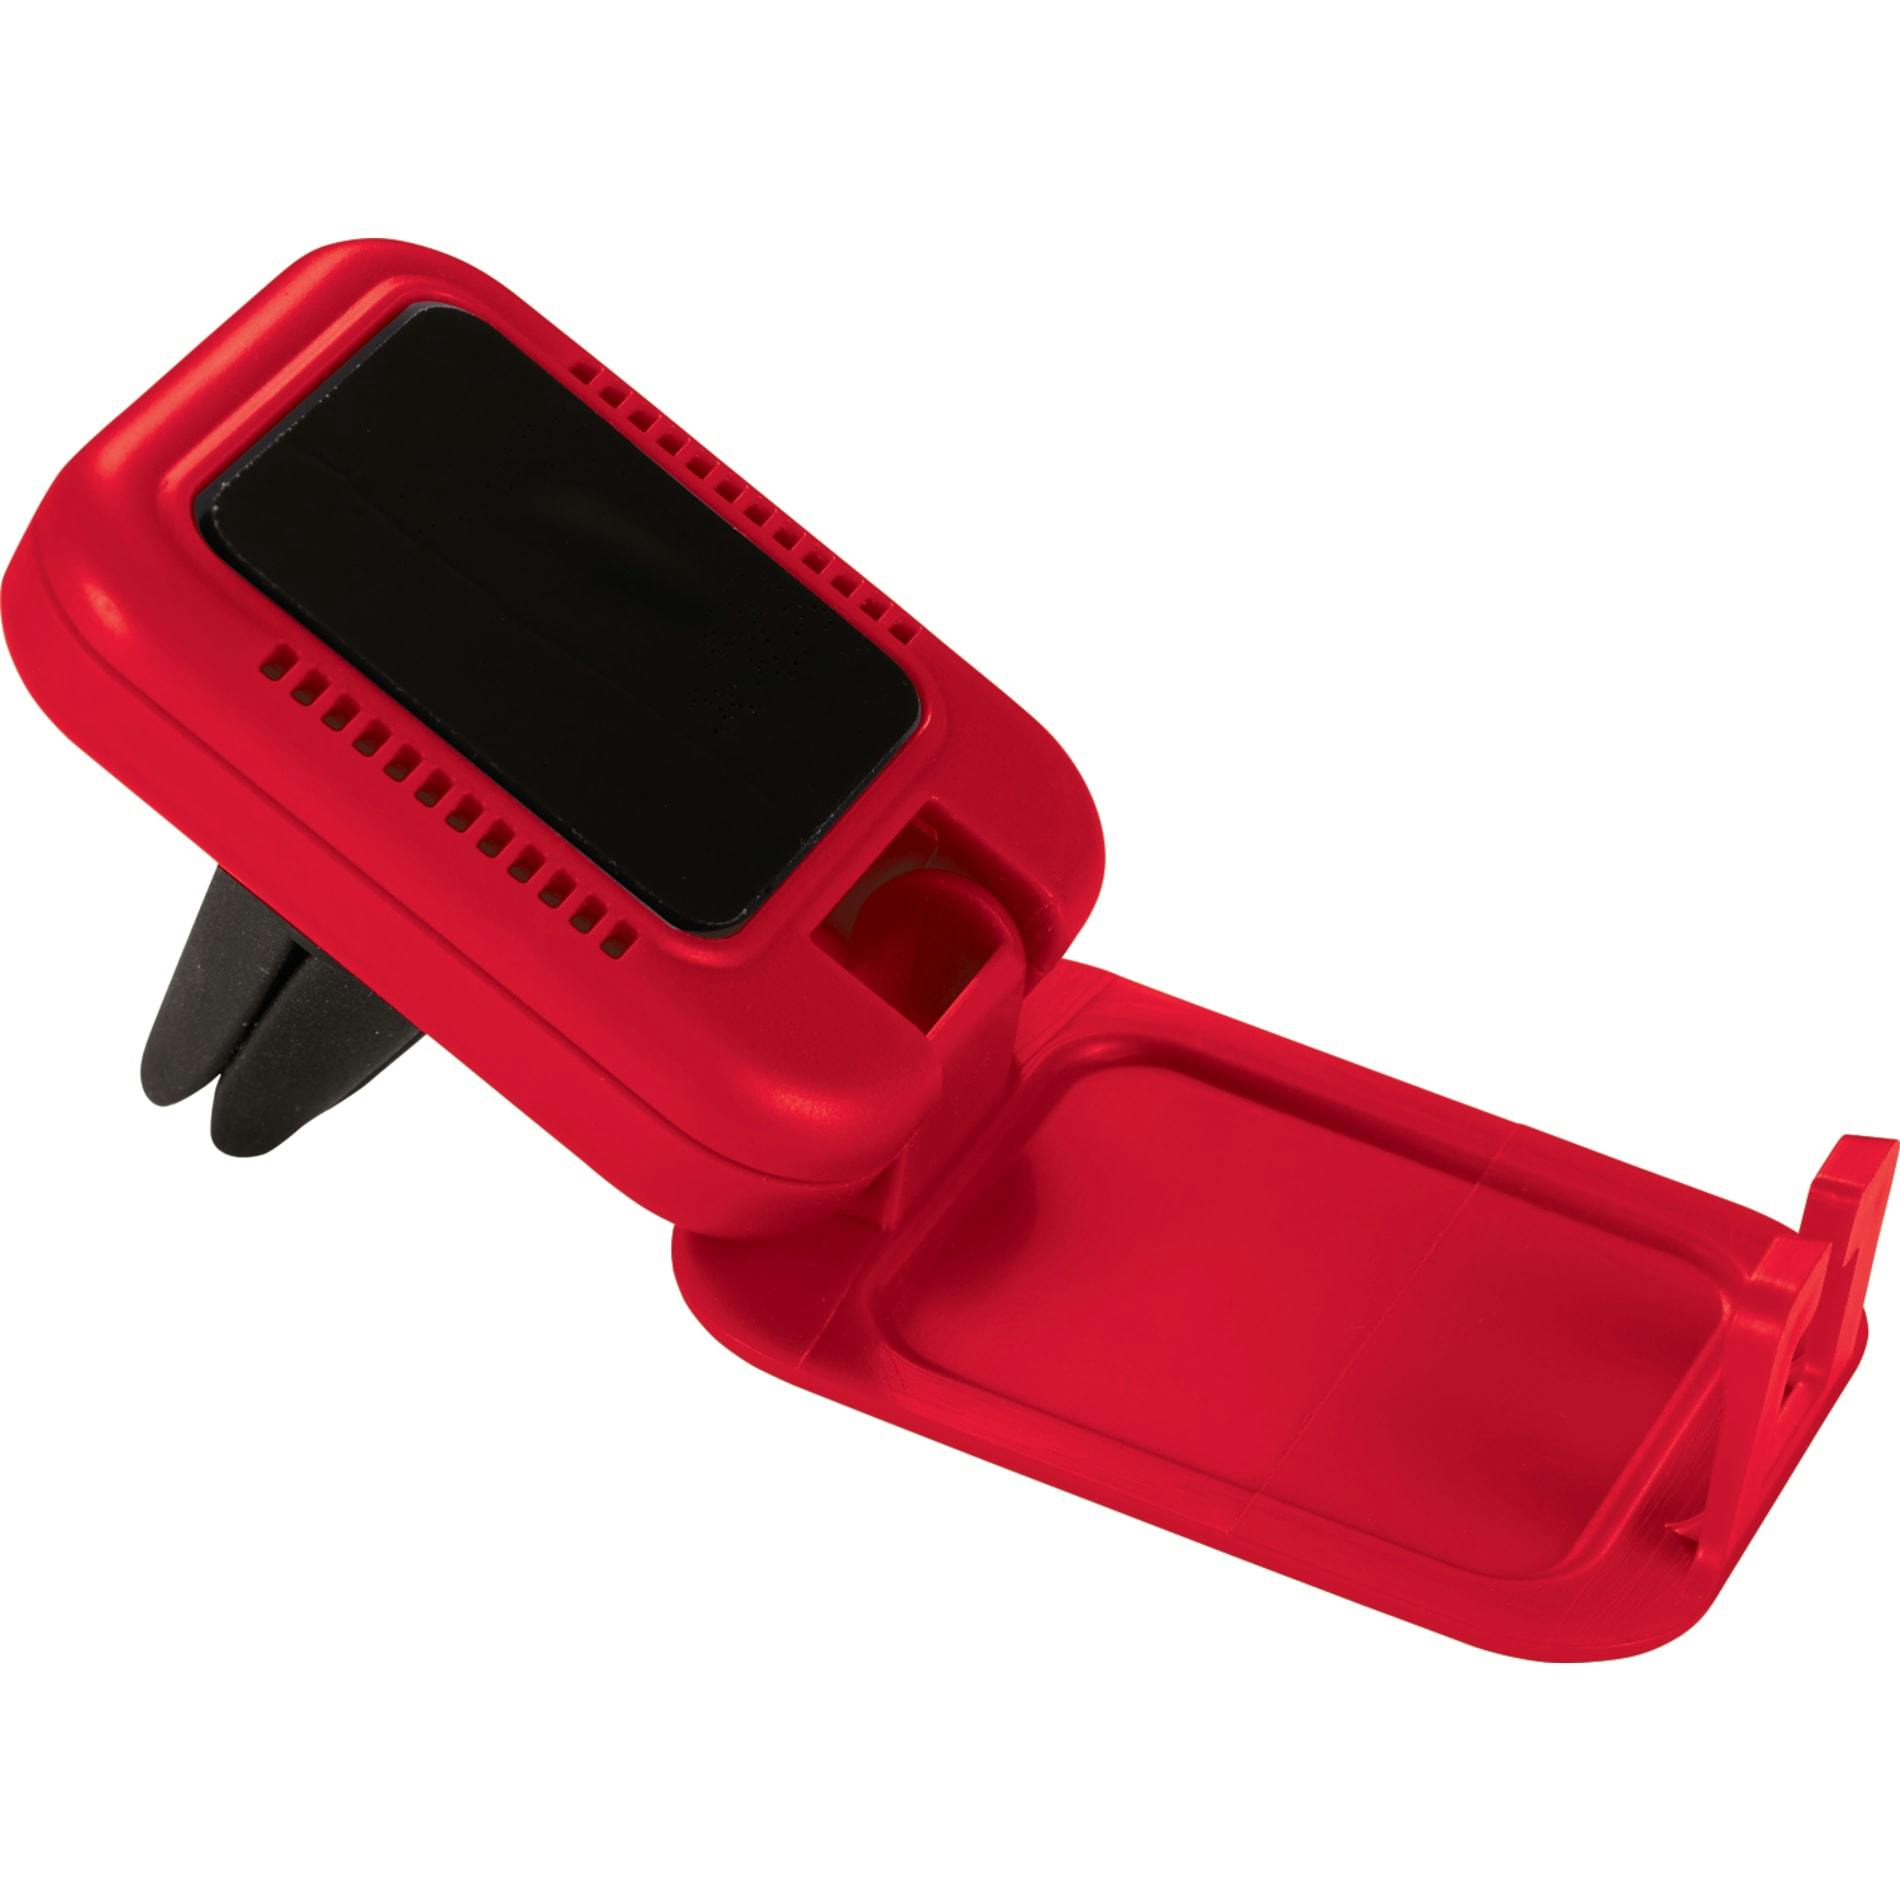 Essence Phone Holder with Air Freshener - additional Image 1